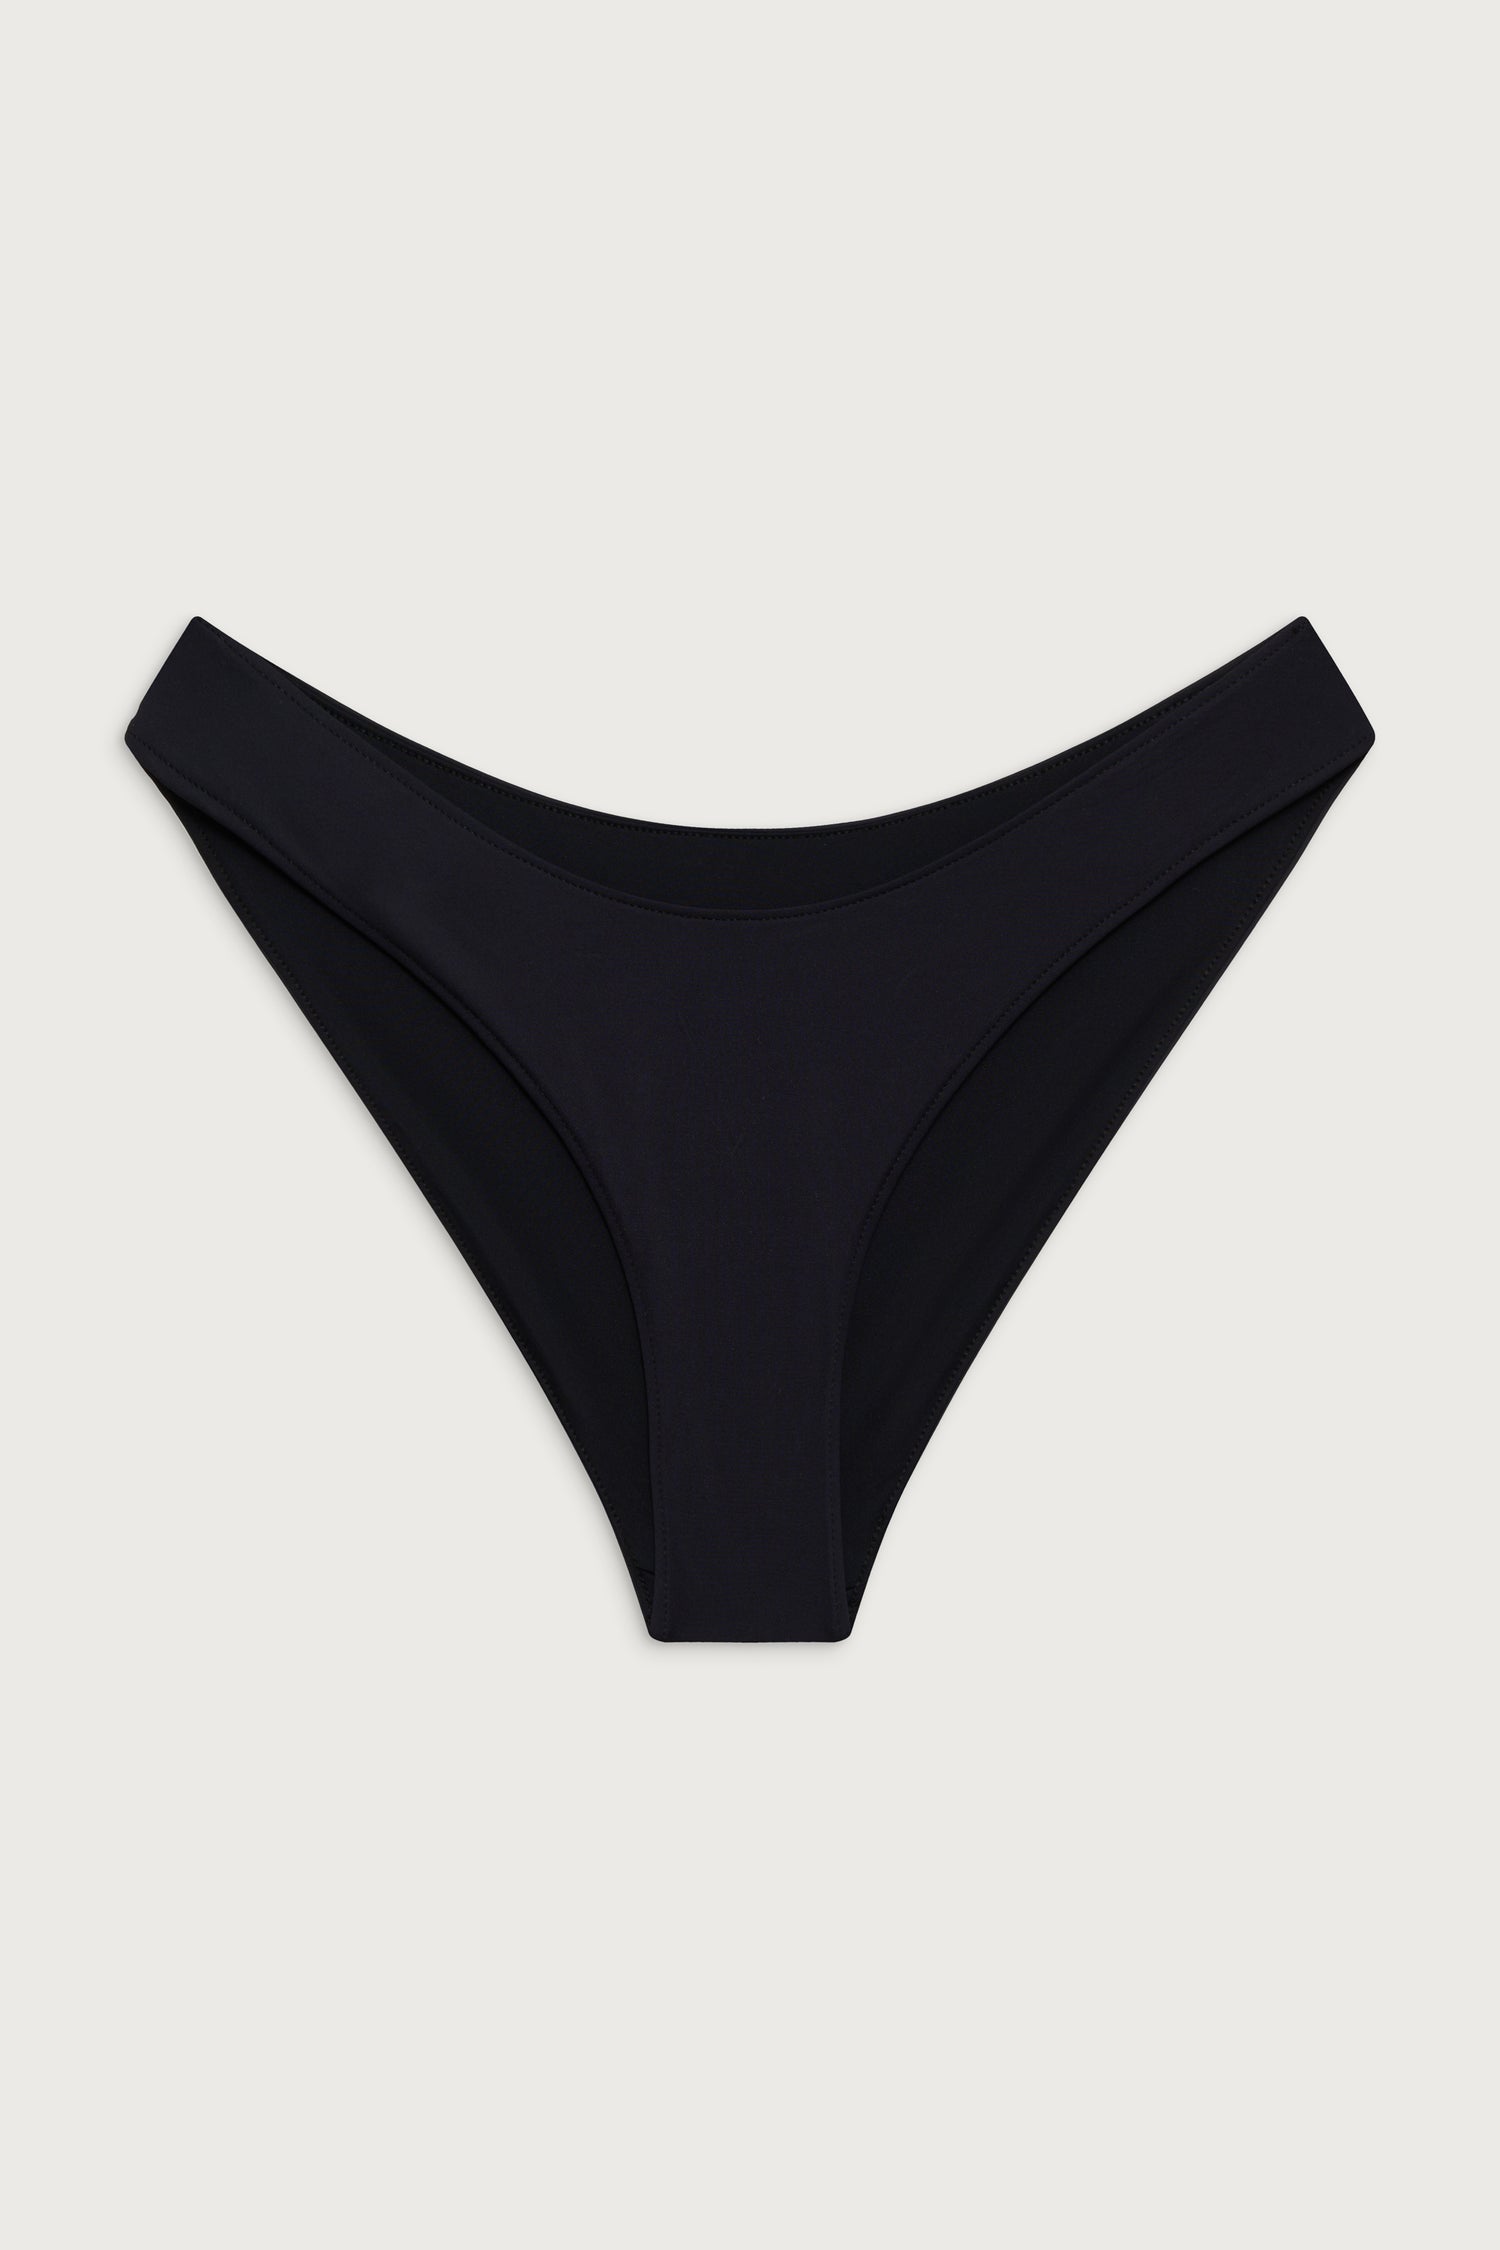 Catalina Womens Swim Bikini Bottom XL Solid Orange Scrunch